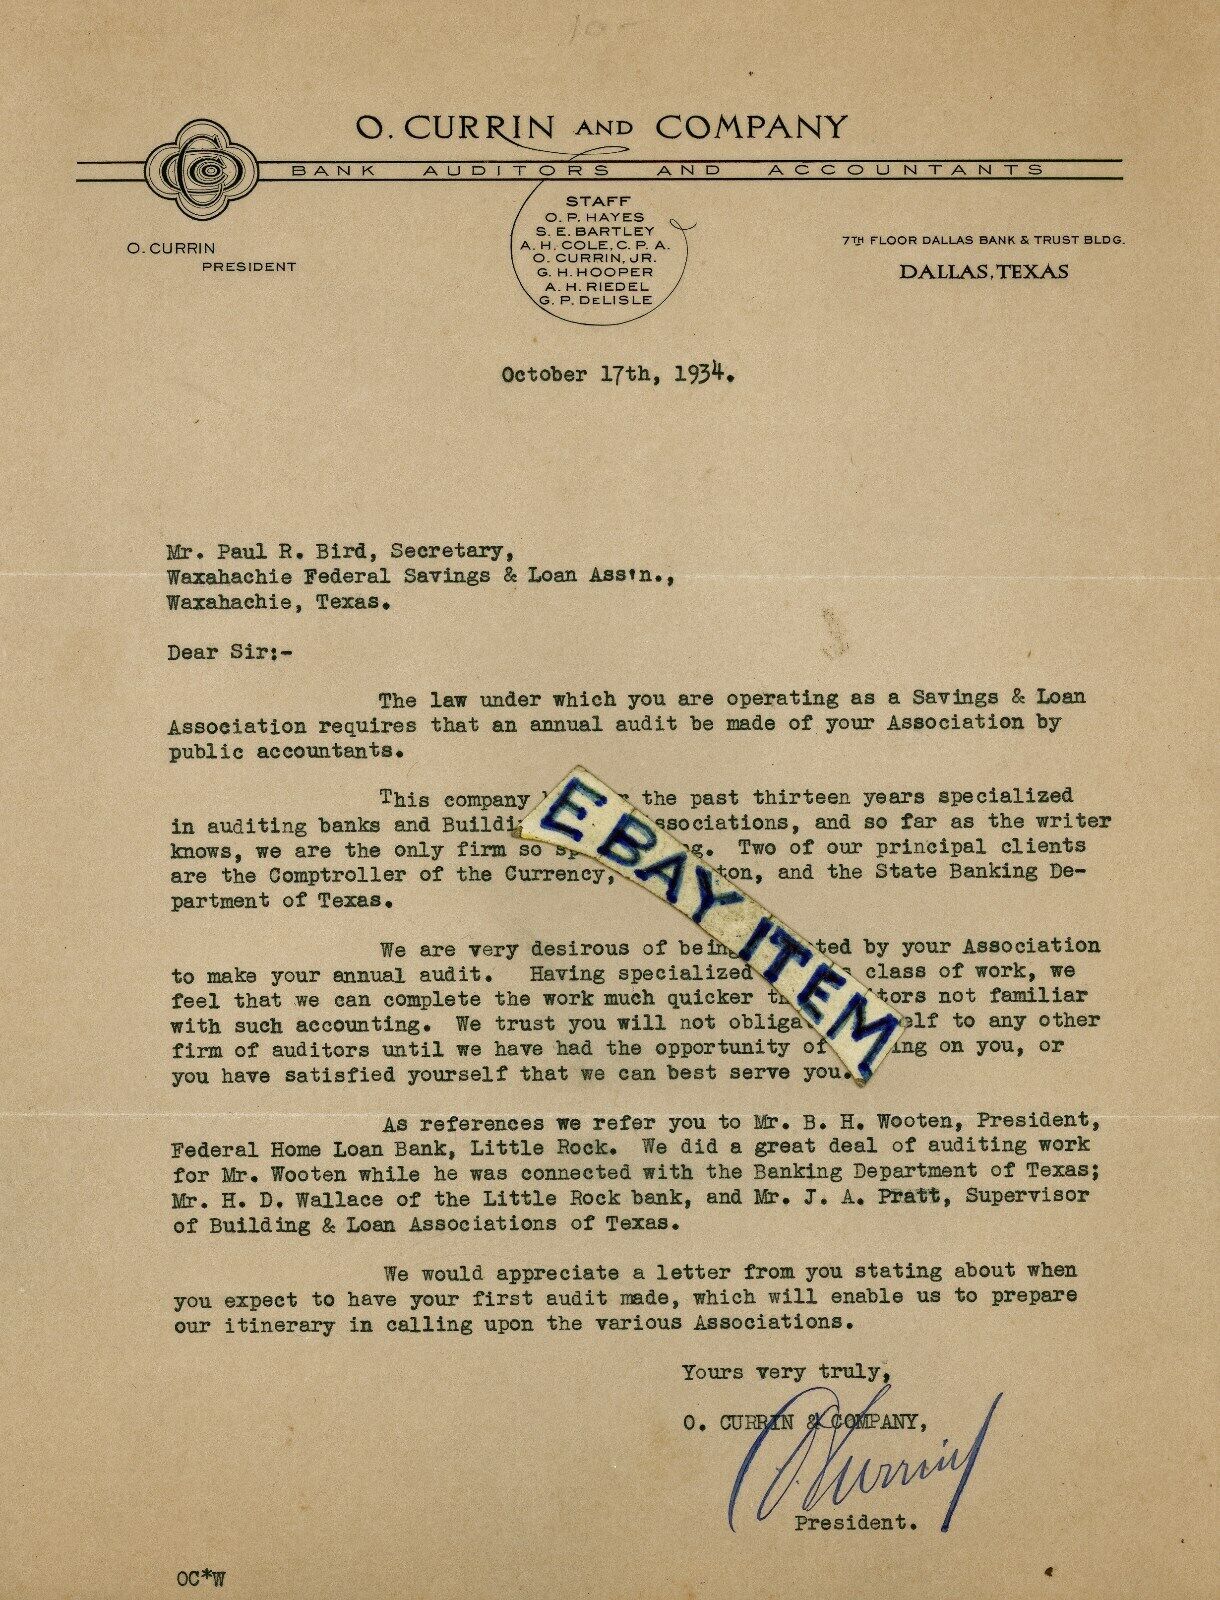 1934 TX. Dallas Texas O. CURRIN & COMPANY letterhead BANK AUDITOR & ACCOUNTANTS